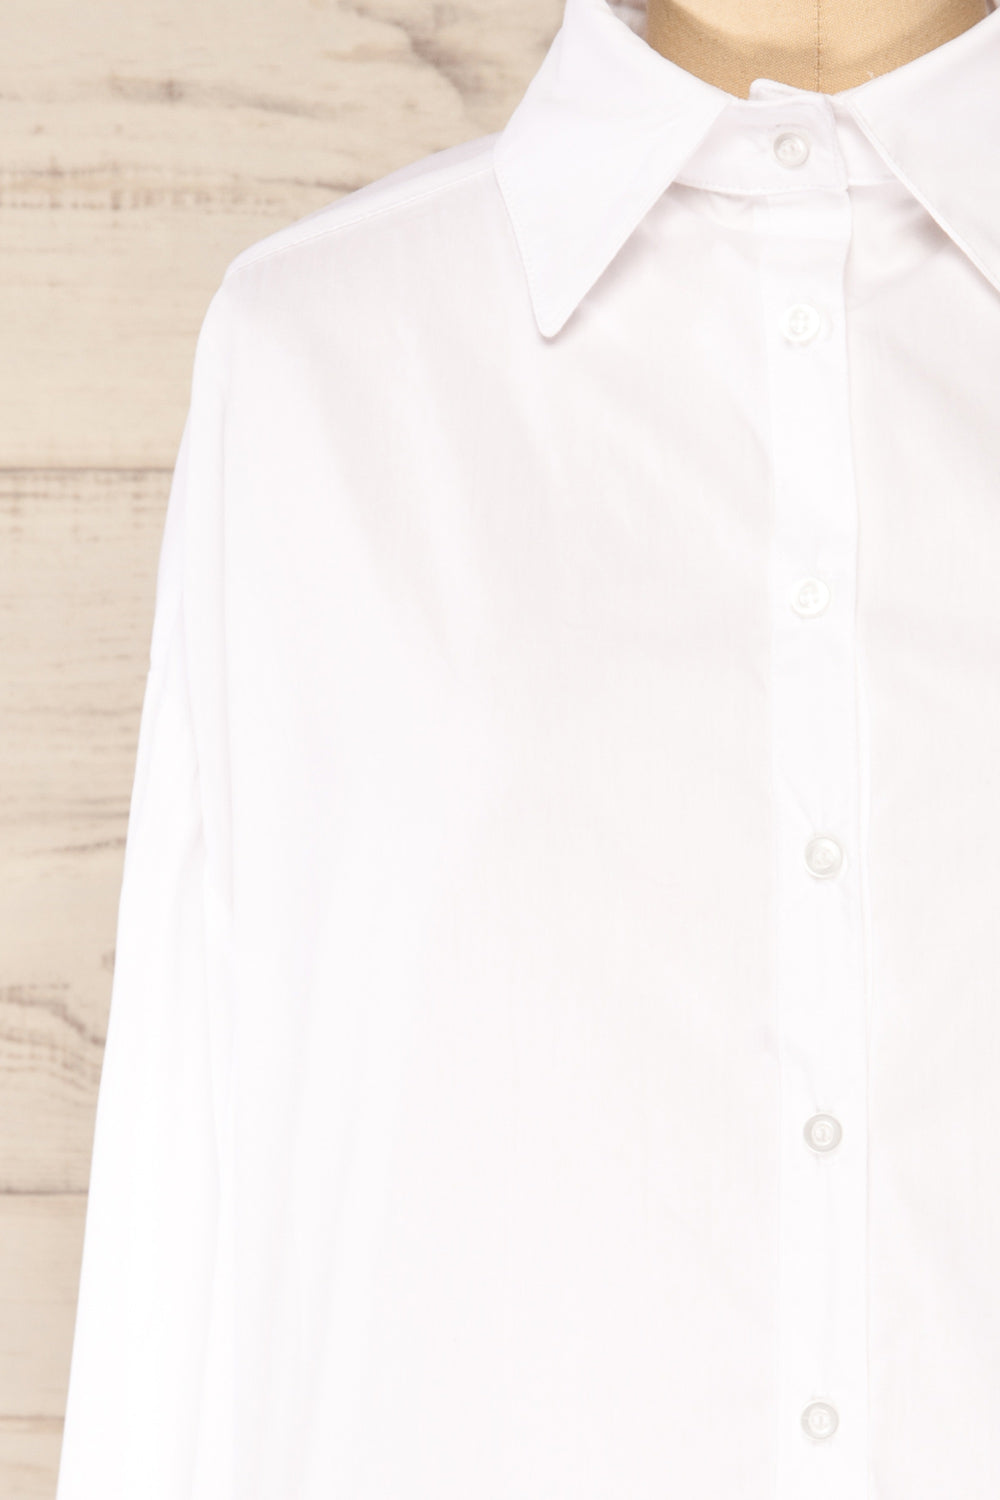 Blairr White Long Sleeve Button-Up Shirt